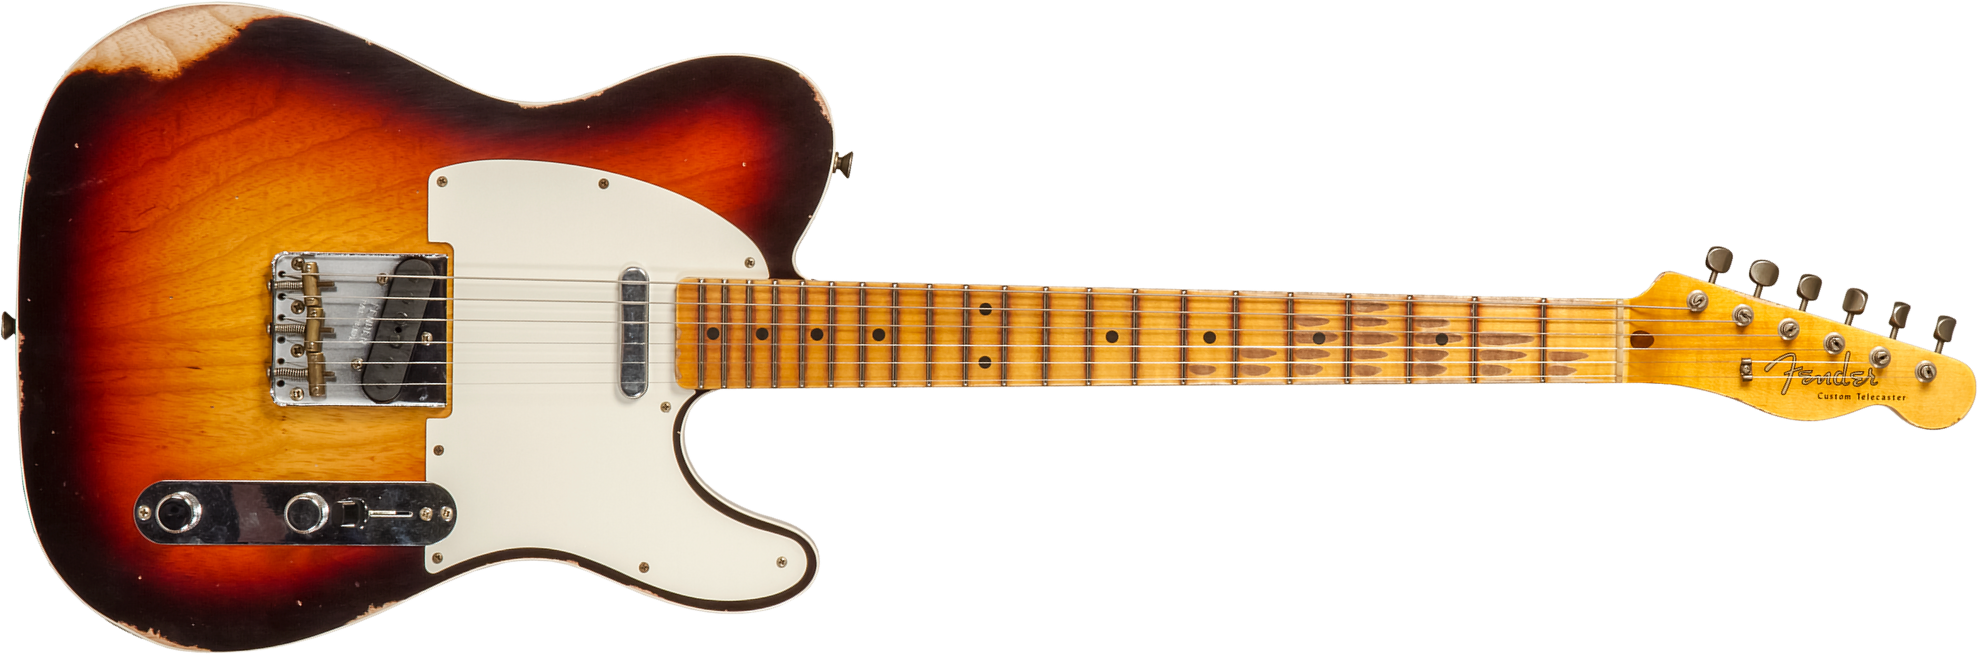 Fender Custom Shop Tele Custom 1959 2s Ht Mn #cz573750 - Relic Chocolate 3-color Sunburst - Televorm elektrische gitaar - Main picture